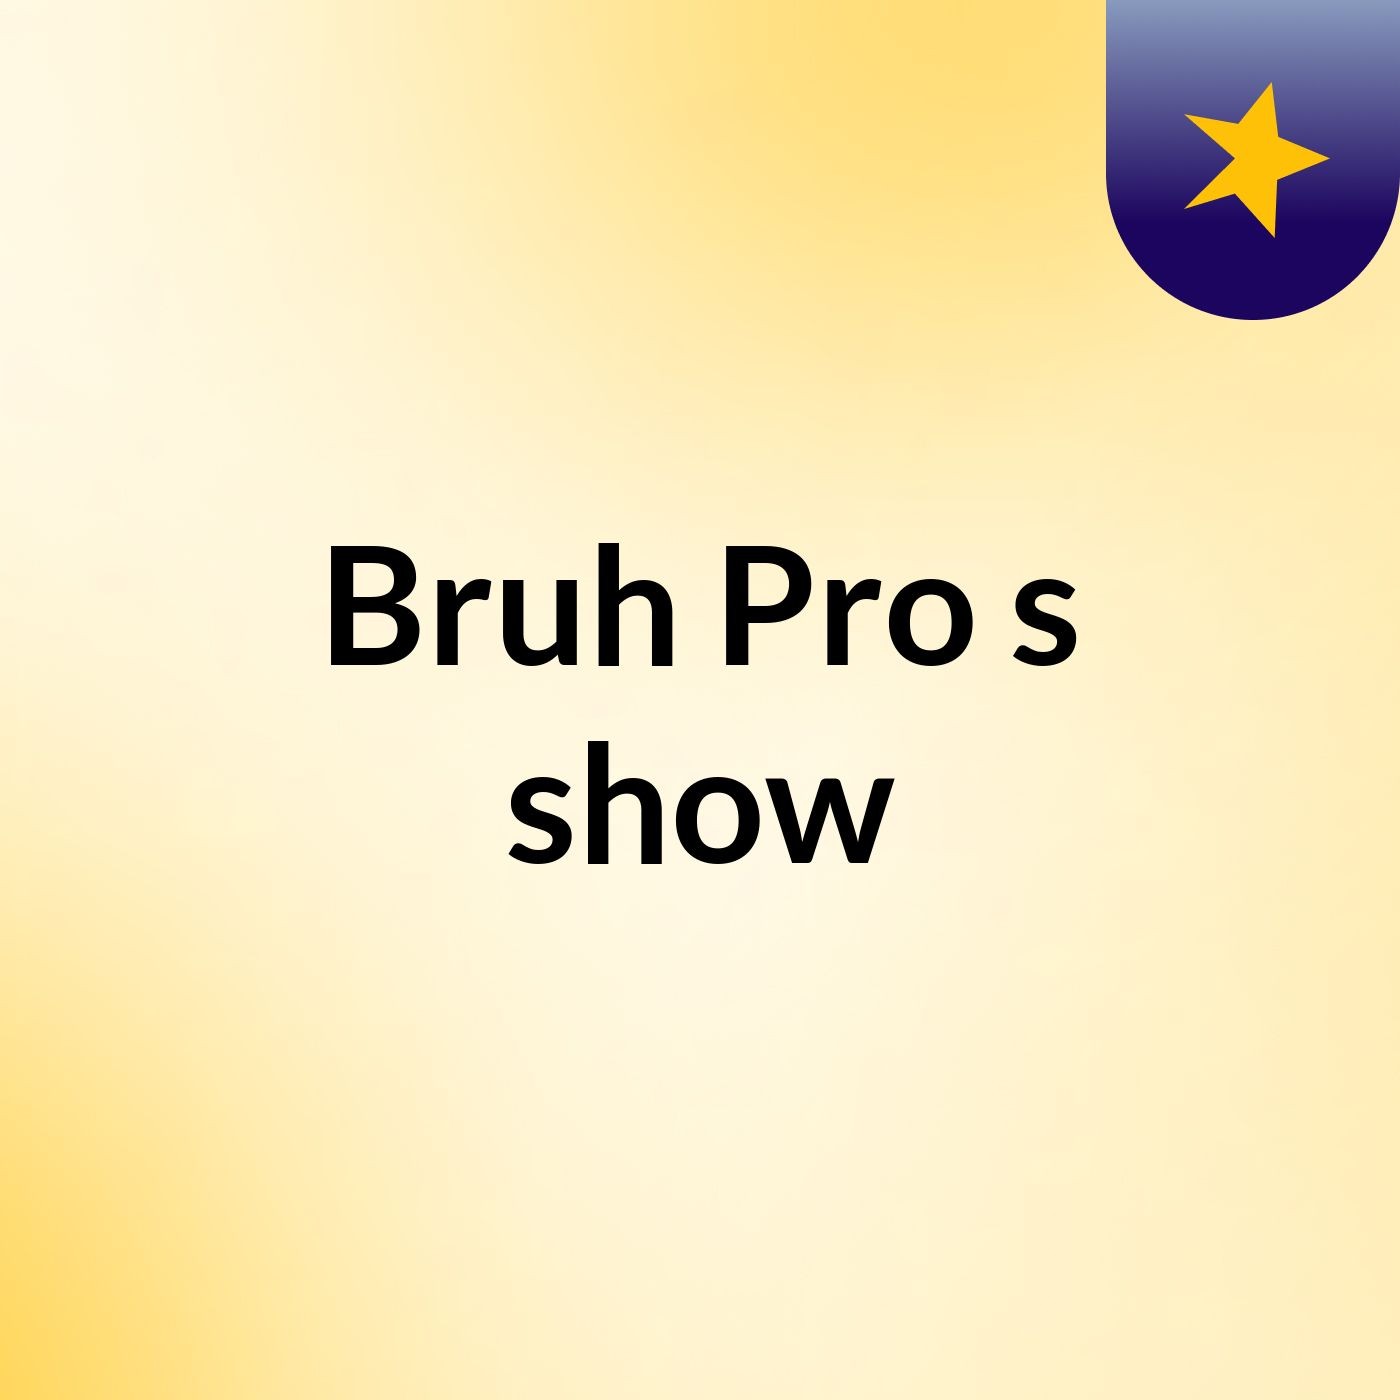 Bruh Pro's show